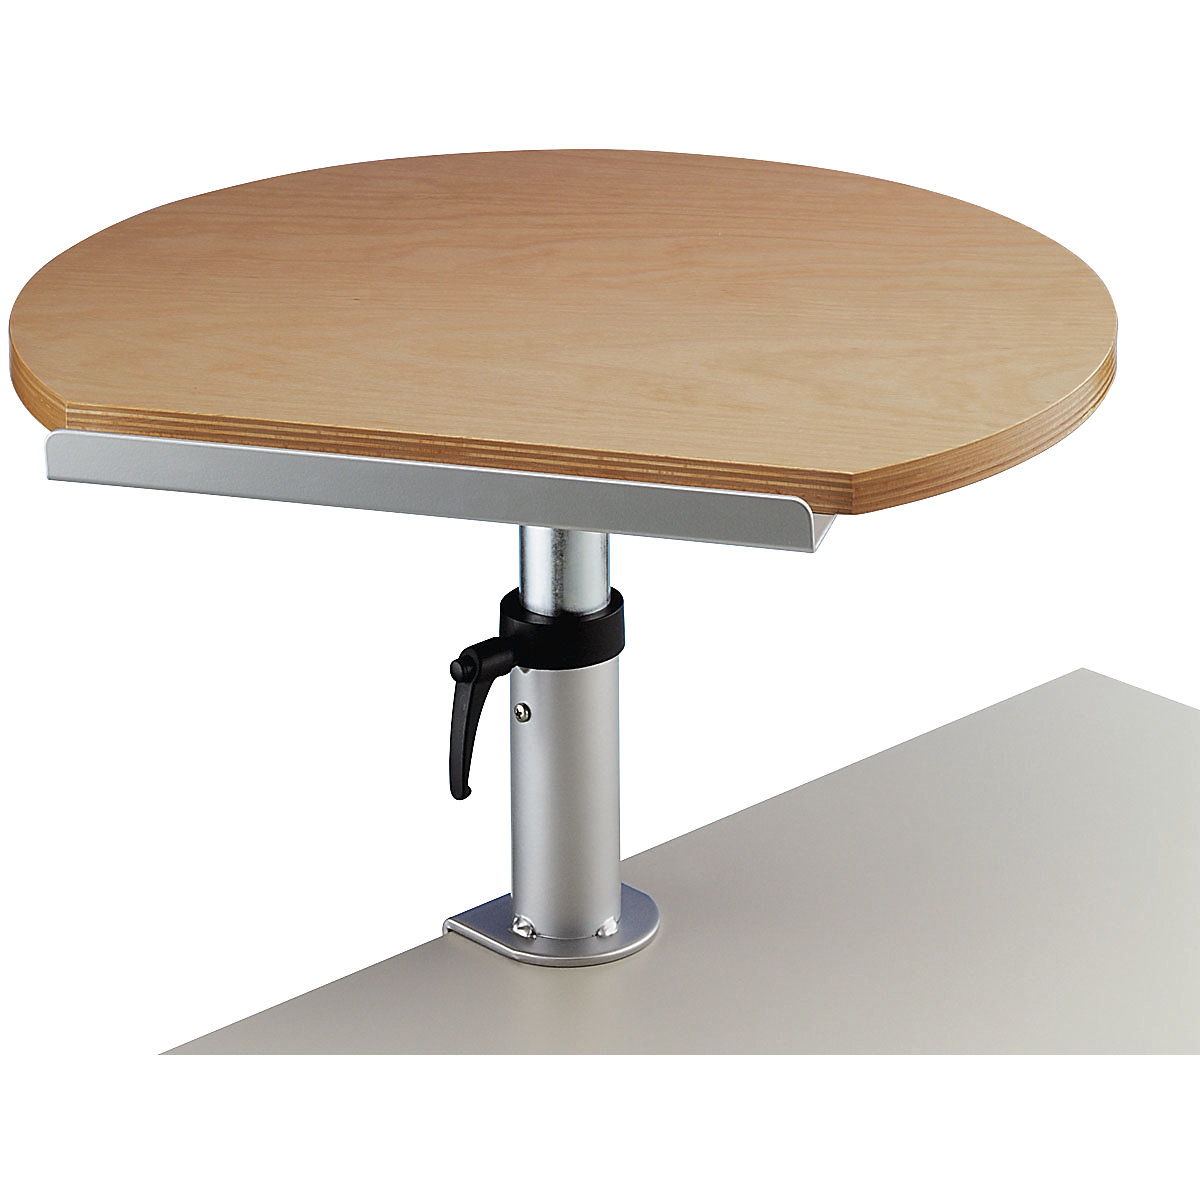 Table pedestal, ergonomic – MAUL, WxD 600 x 520 mm, height adjustable, beech finish-4